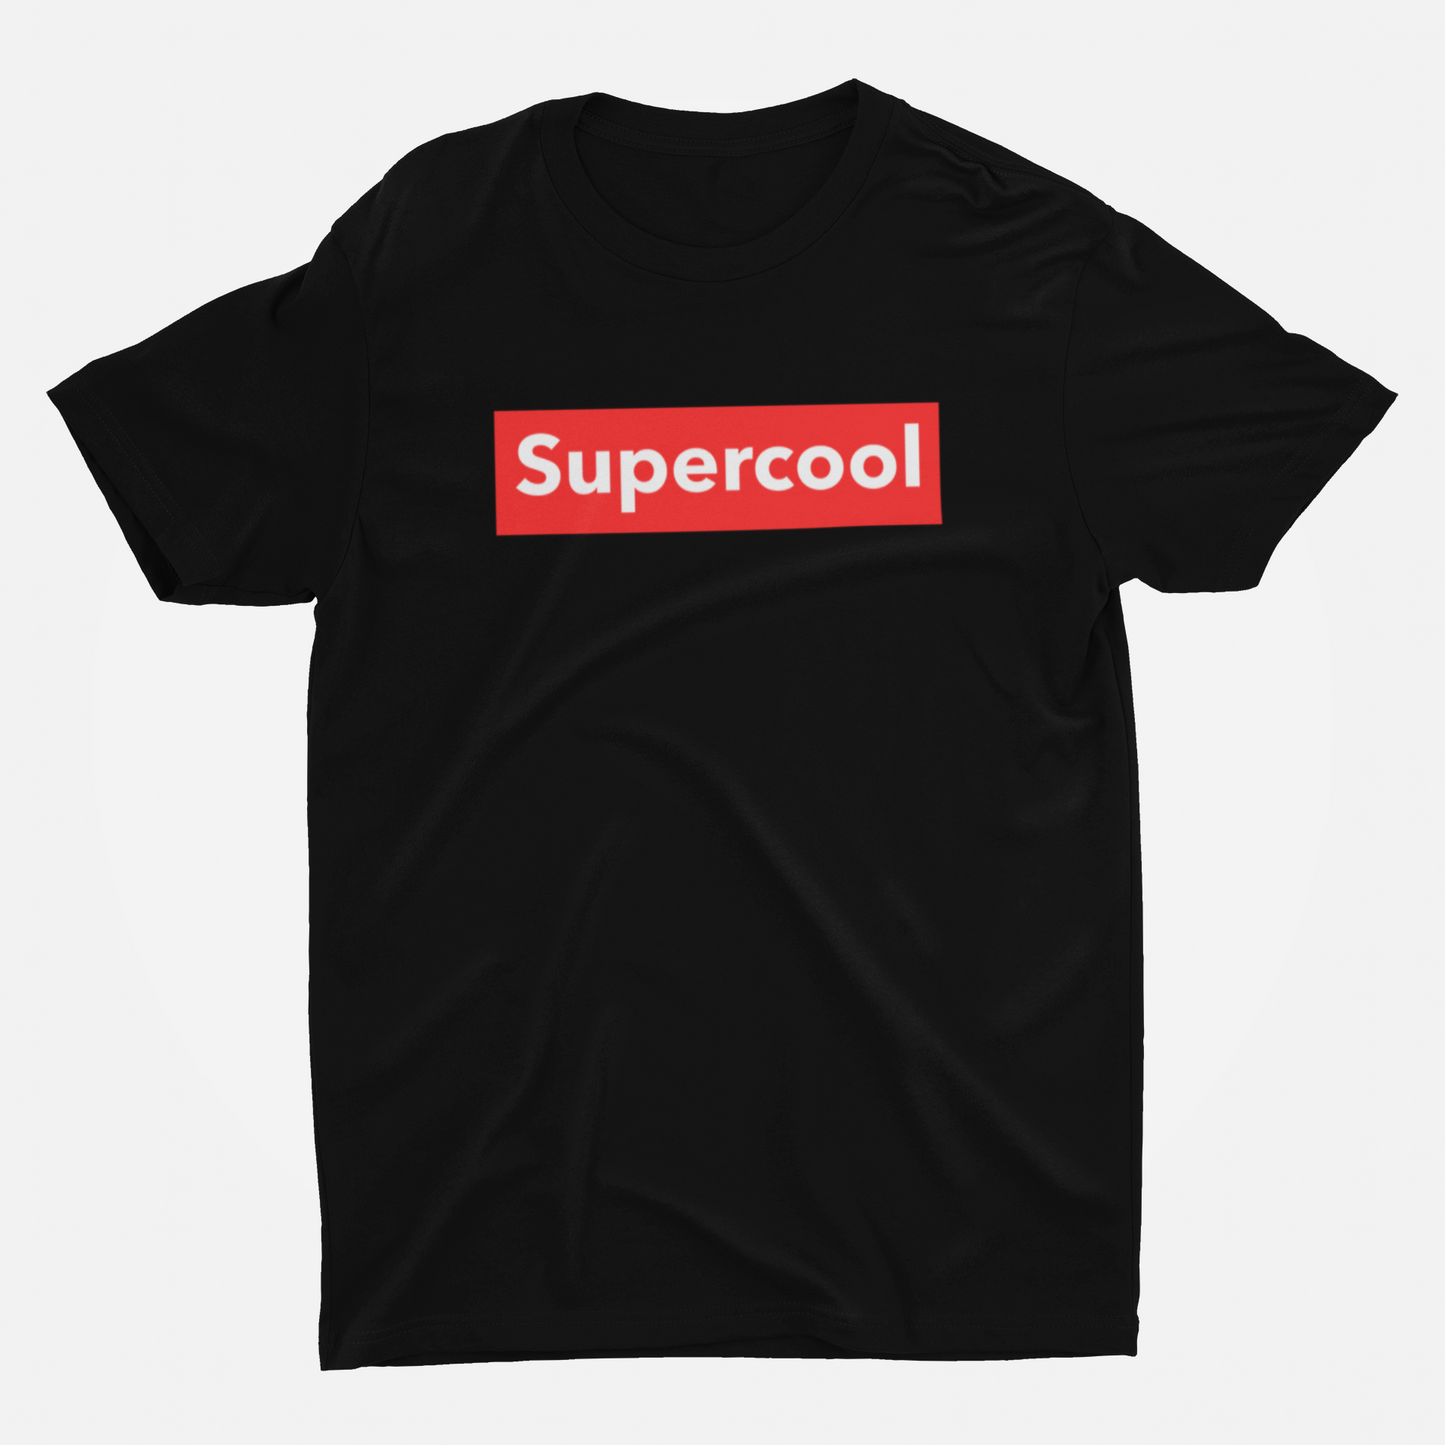 Supercool Black Round Neck T-Shirt for Men. 